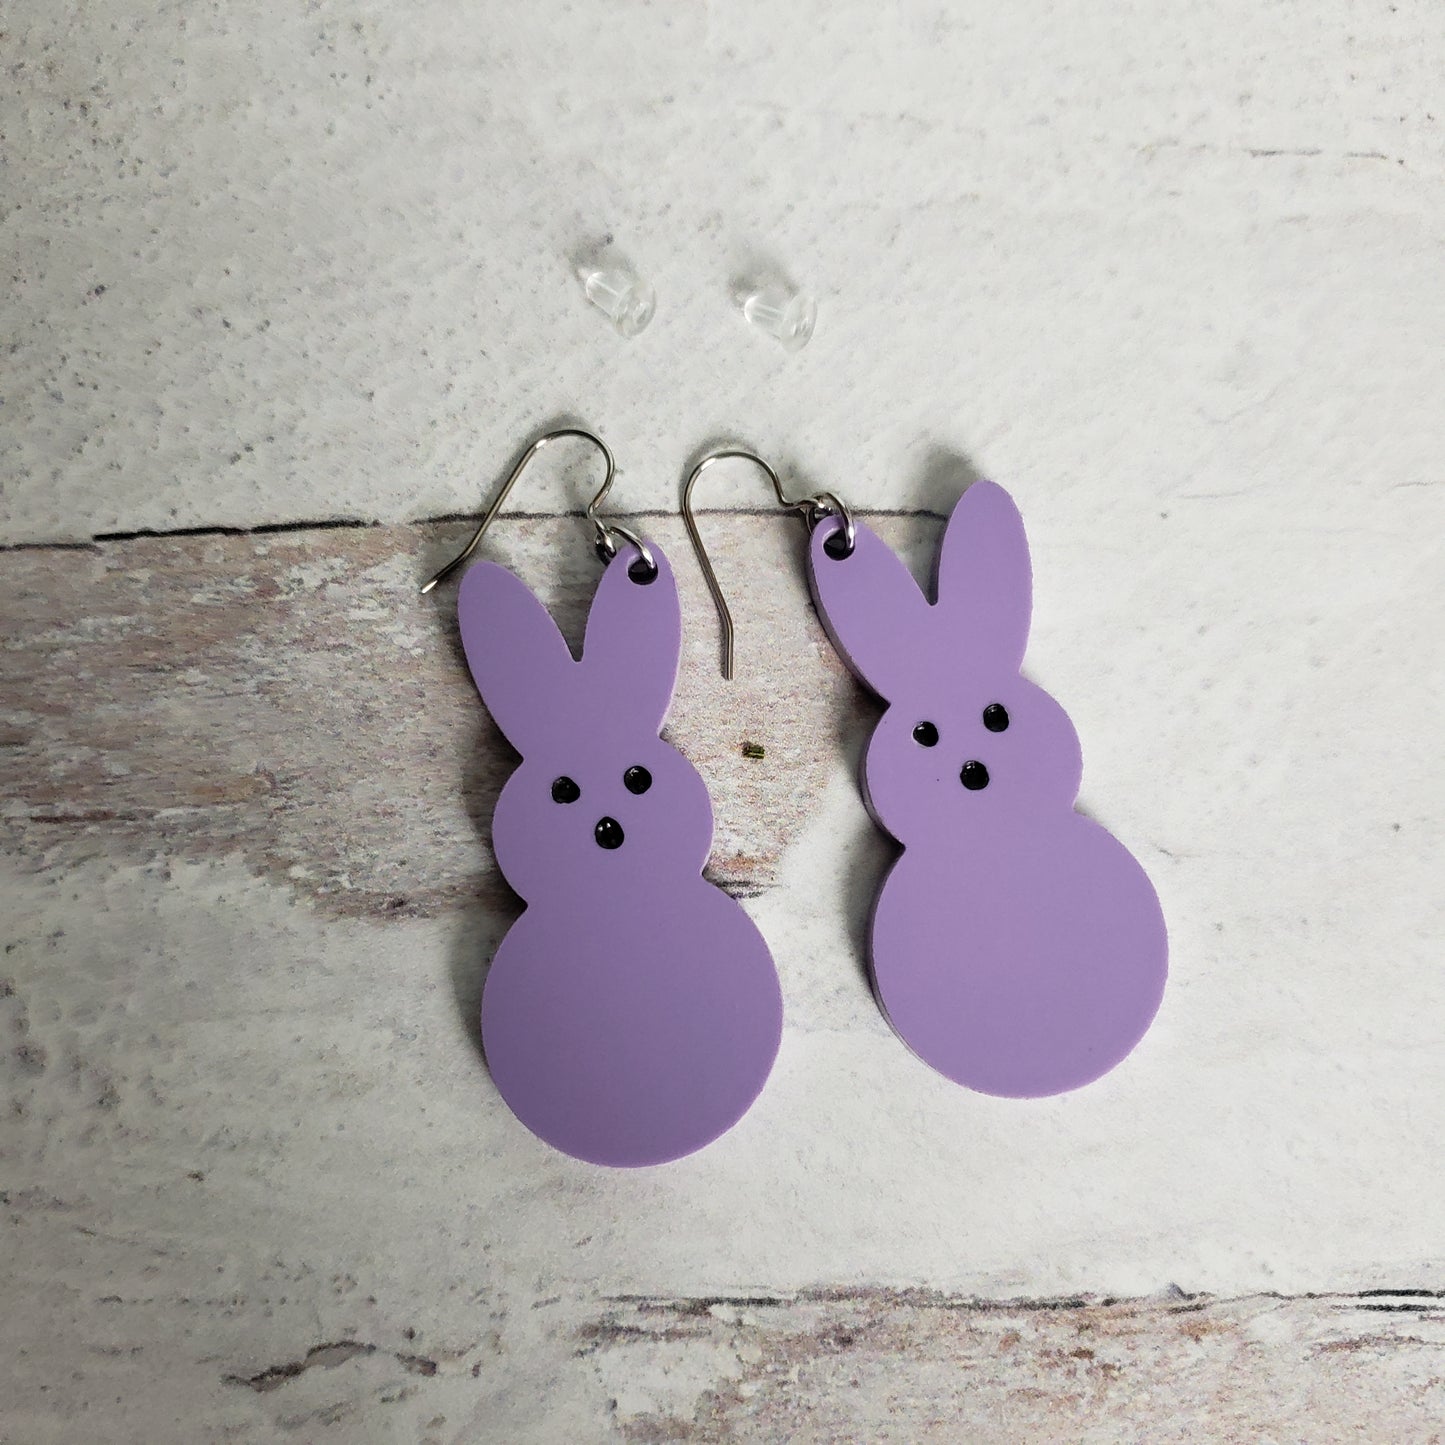 Matte pastel purple Marshmallow Bunny Earrings on stainless earring wires.